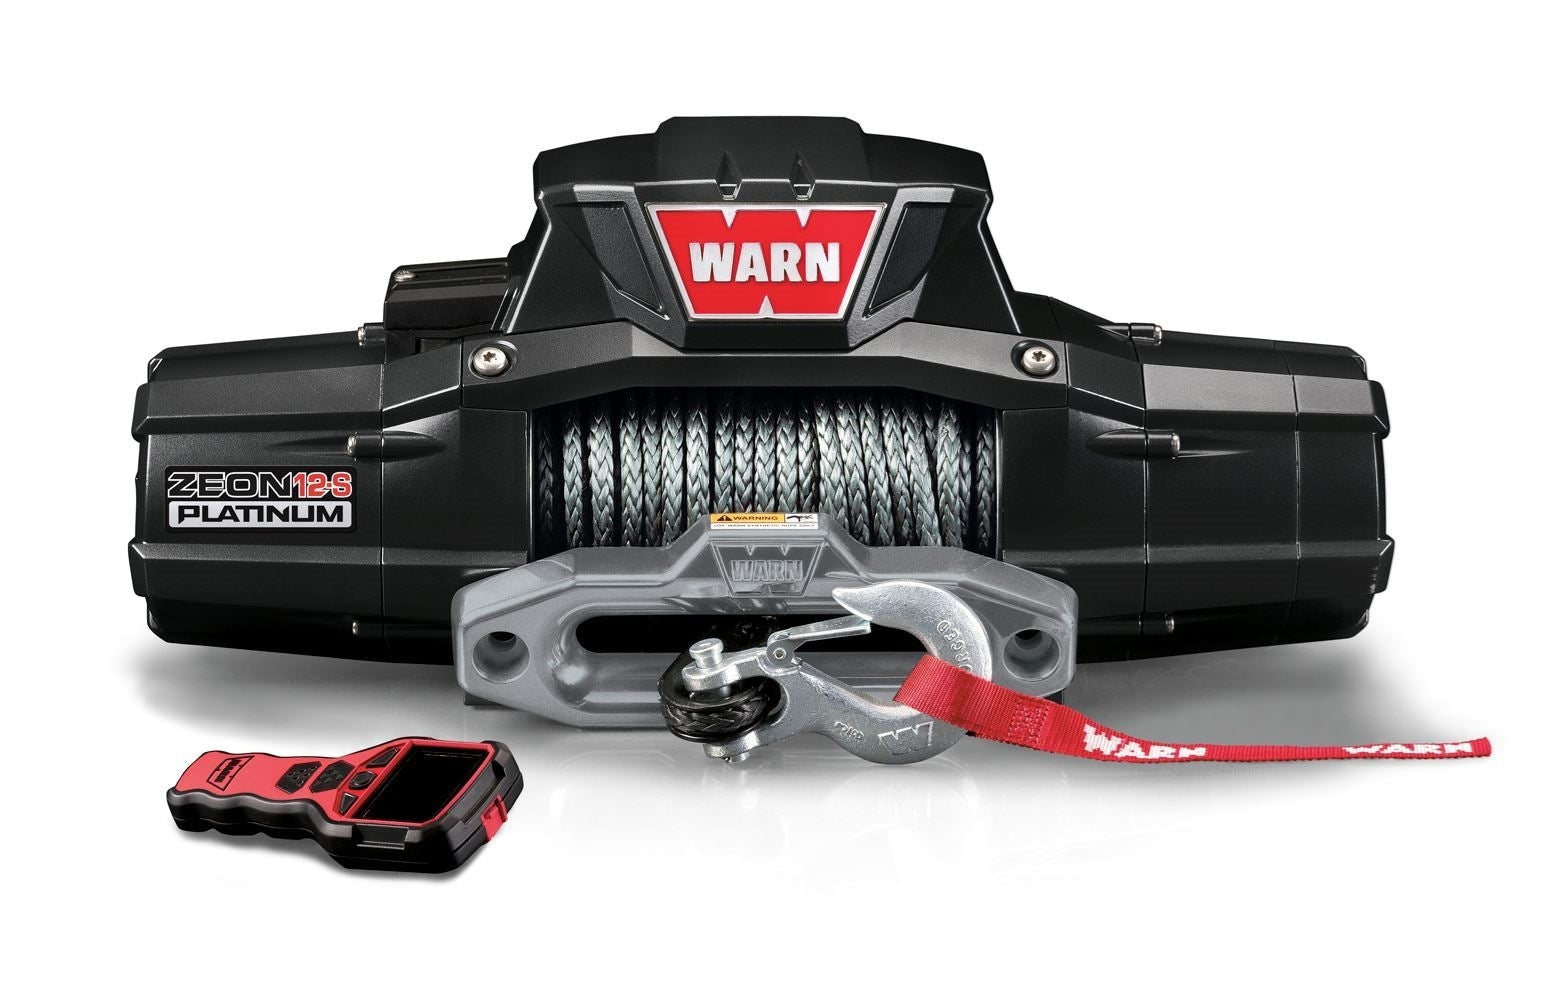 WARN ZEON 12-S Platinum Winch - 12,000 lb Capacity | Sackett Ranch